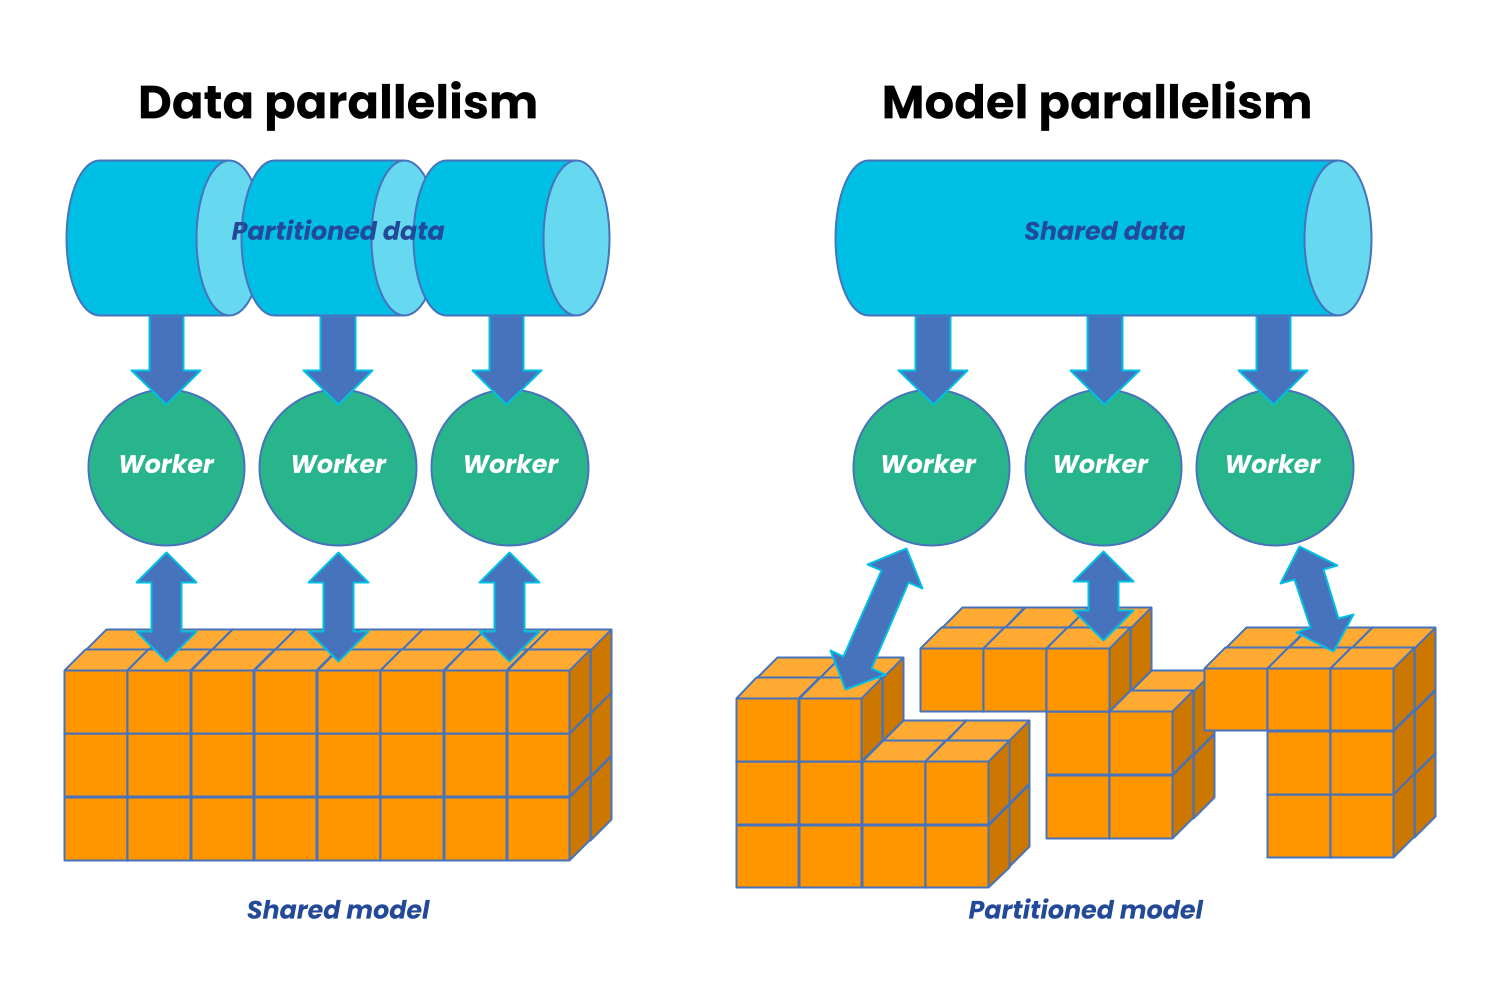 Model Parallelism